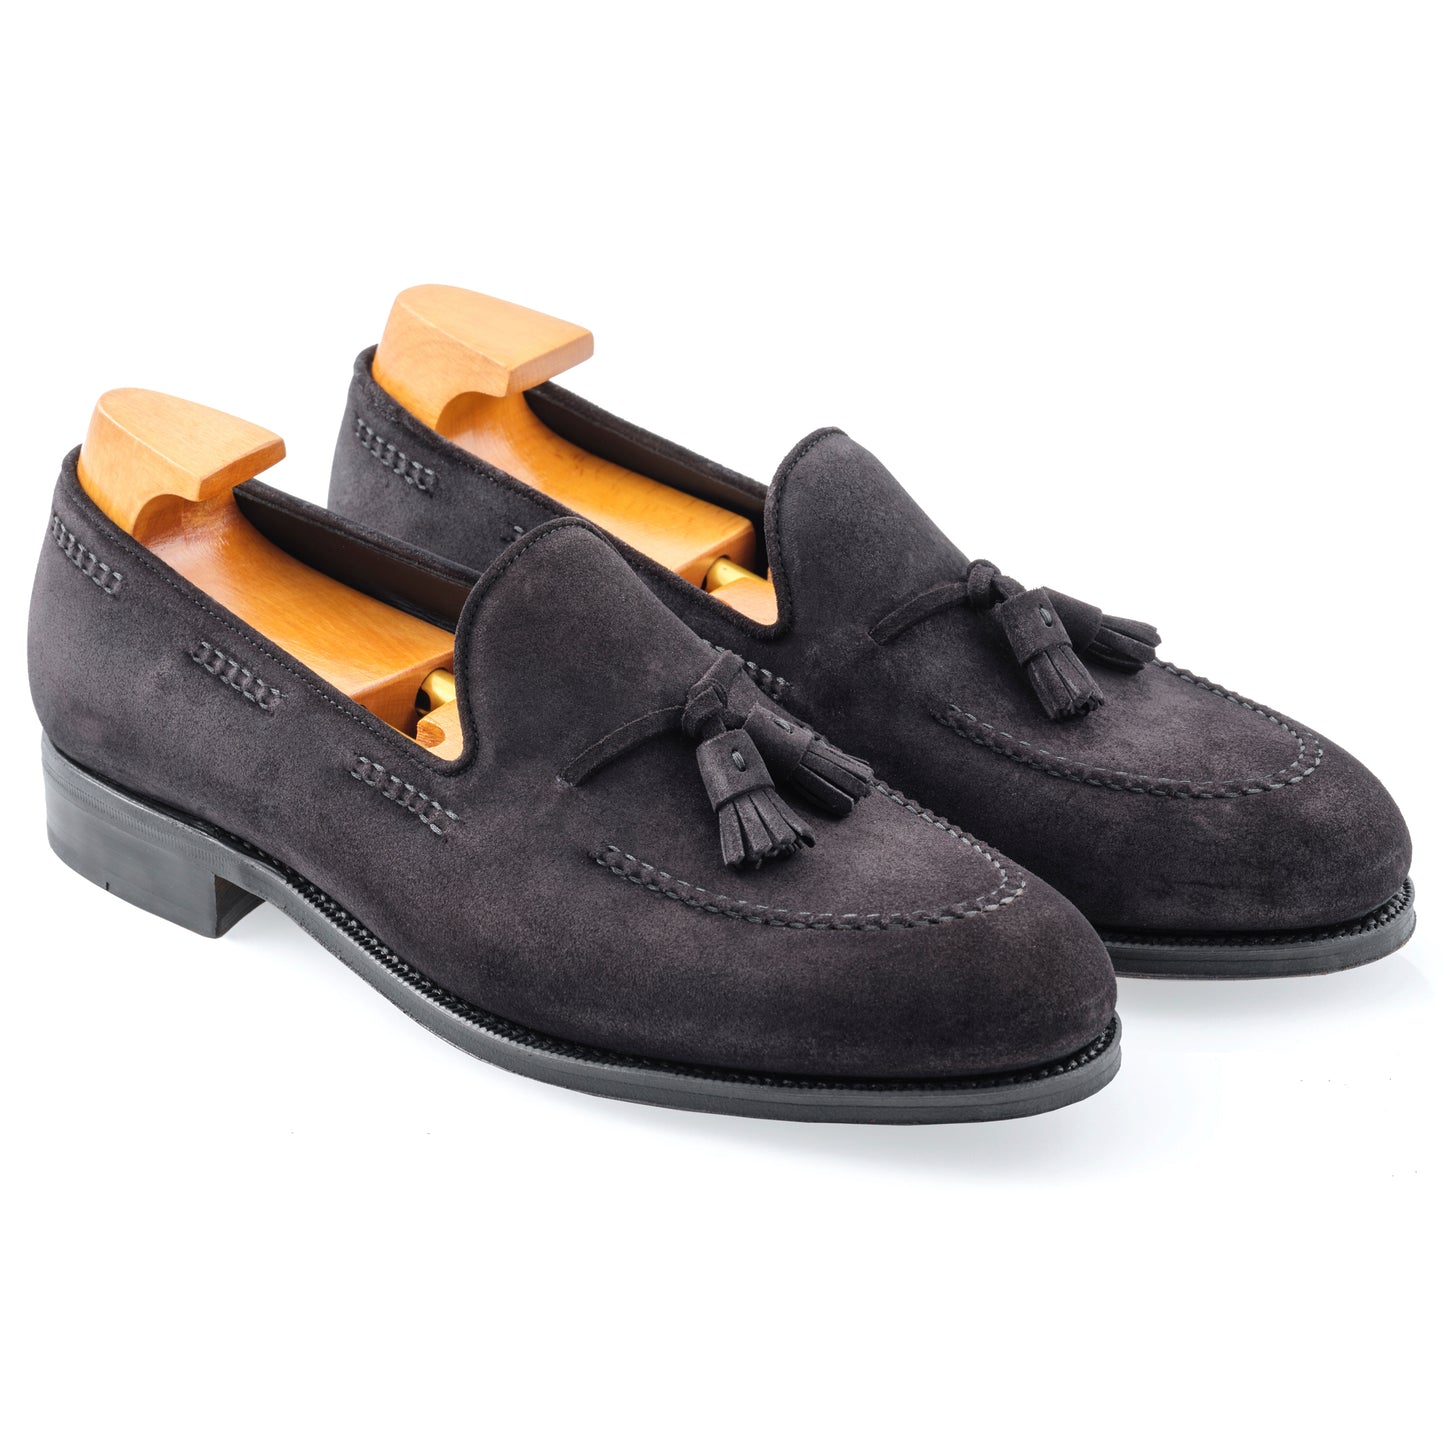 TLB Mallorca leather shoes 656 / JONES / SUEDE BLACK